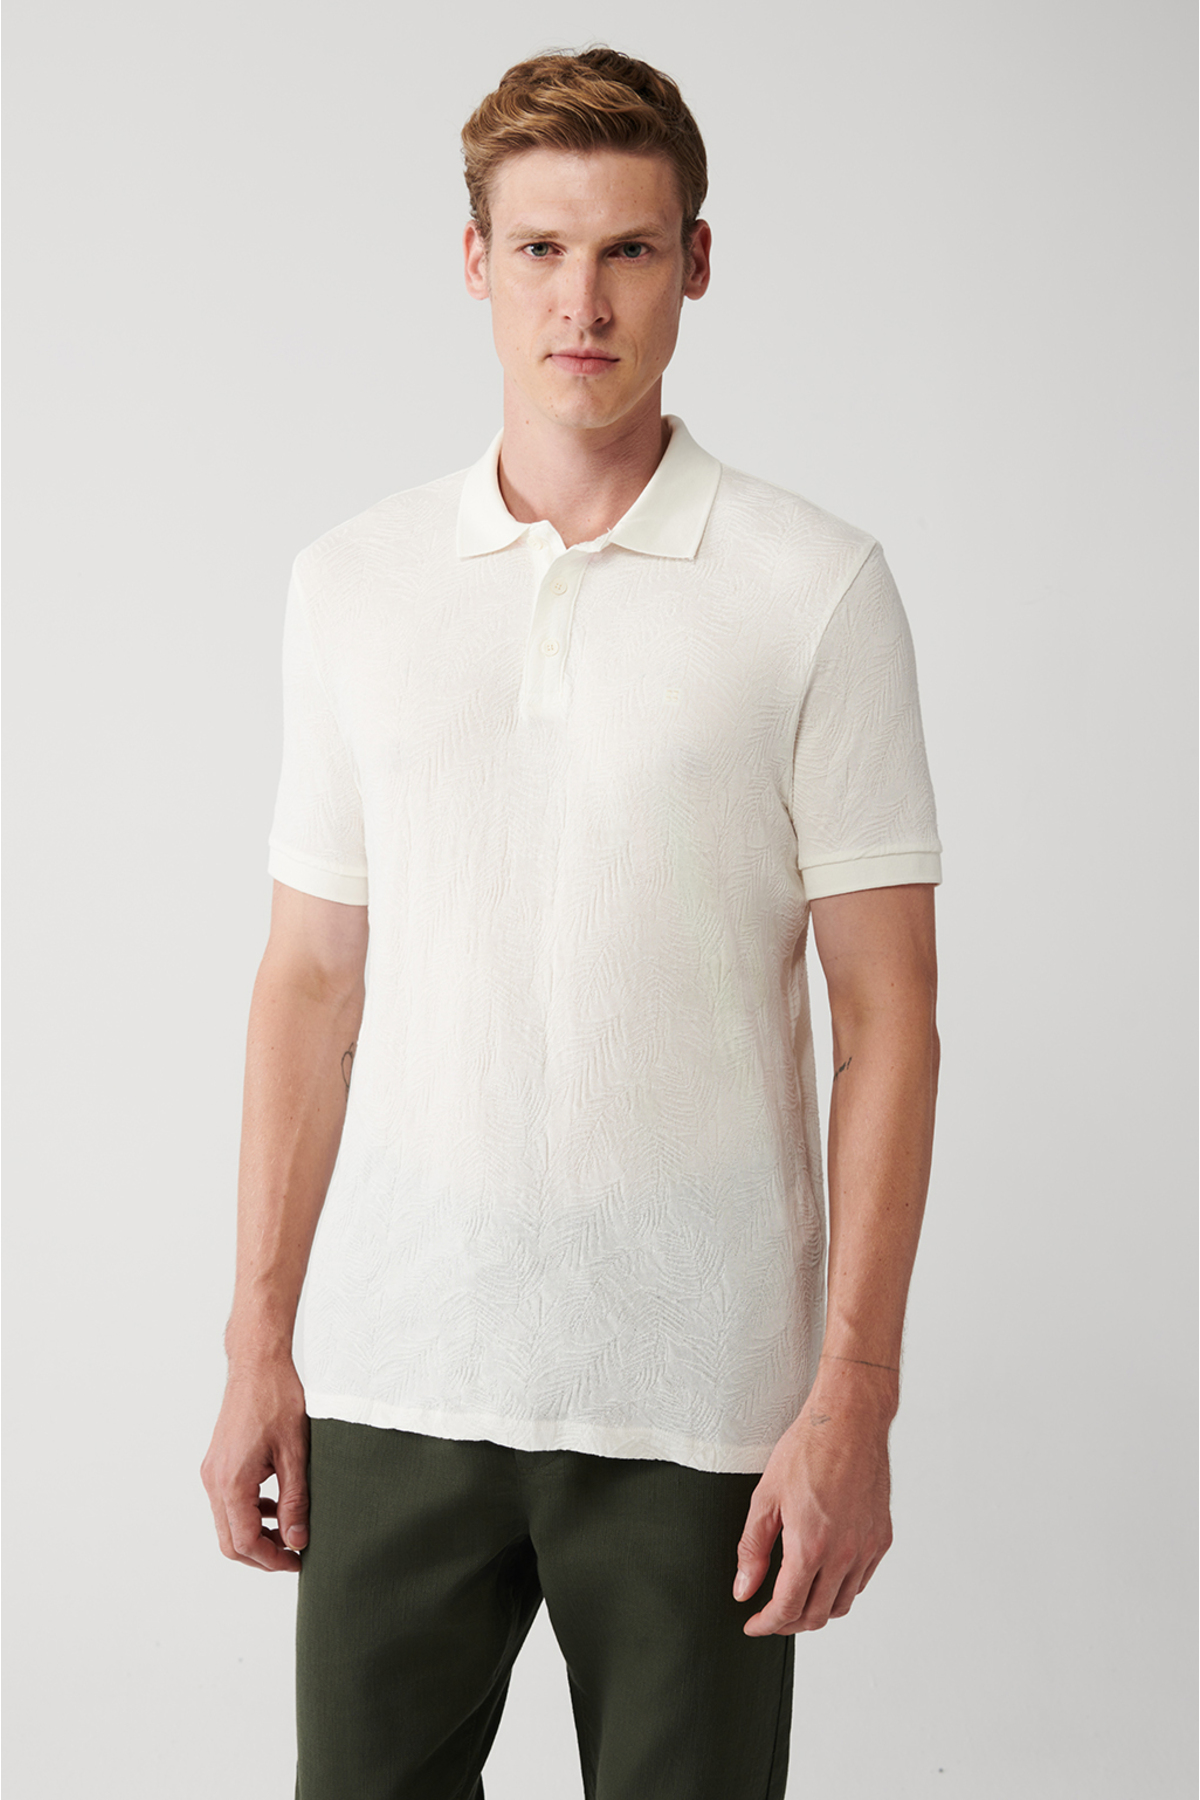 Avva Men's White 100% Cotton 3 Button Polo Neck Ribbed Regular Fit T-shirt